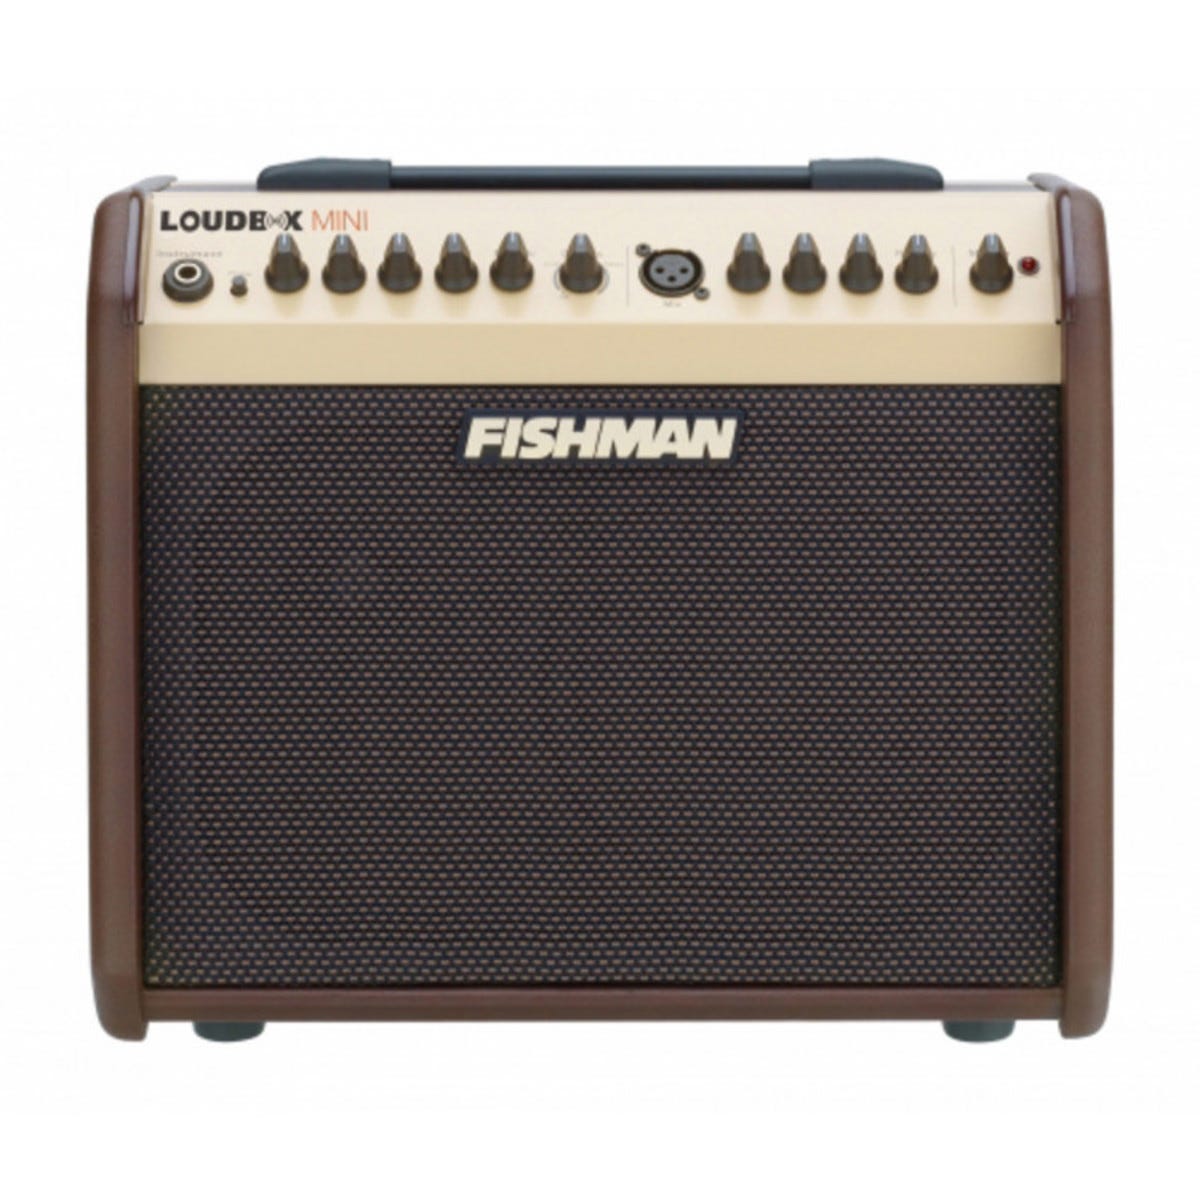 Fishman Loudbox Mini Acoustic Combo - Nearly New at Gear4music